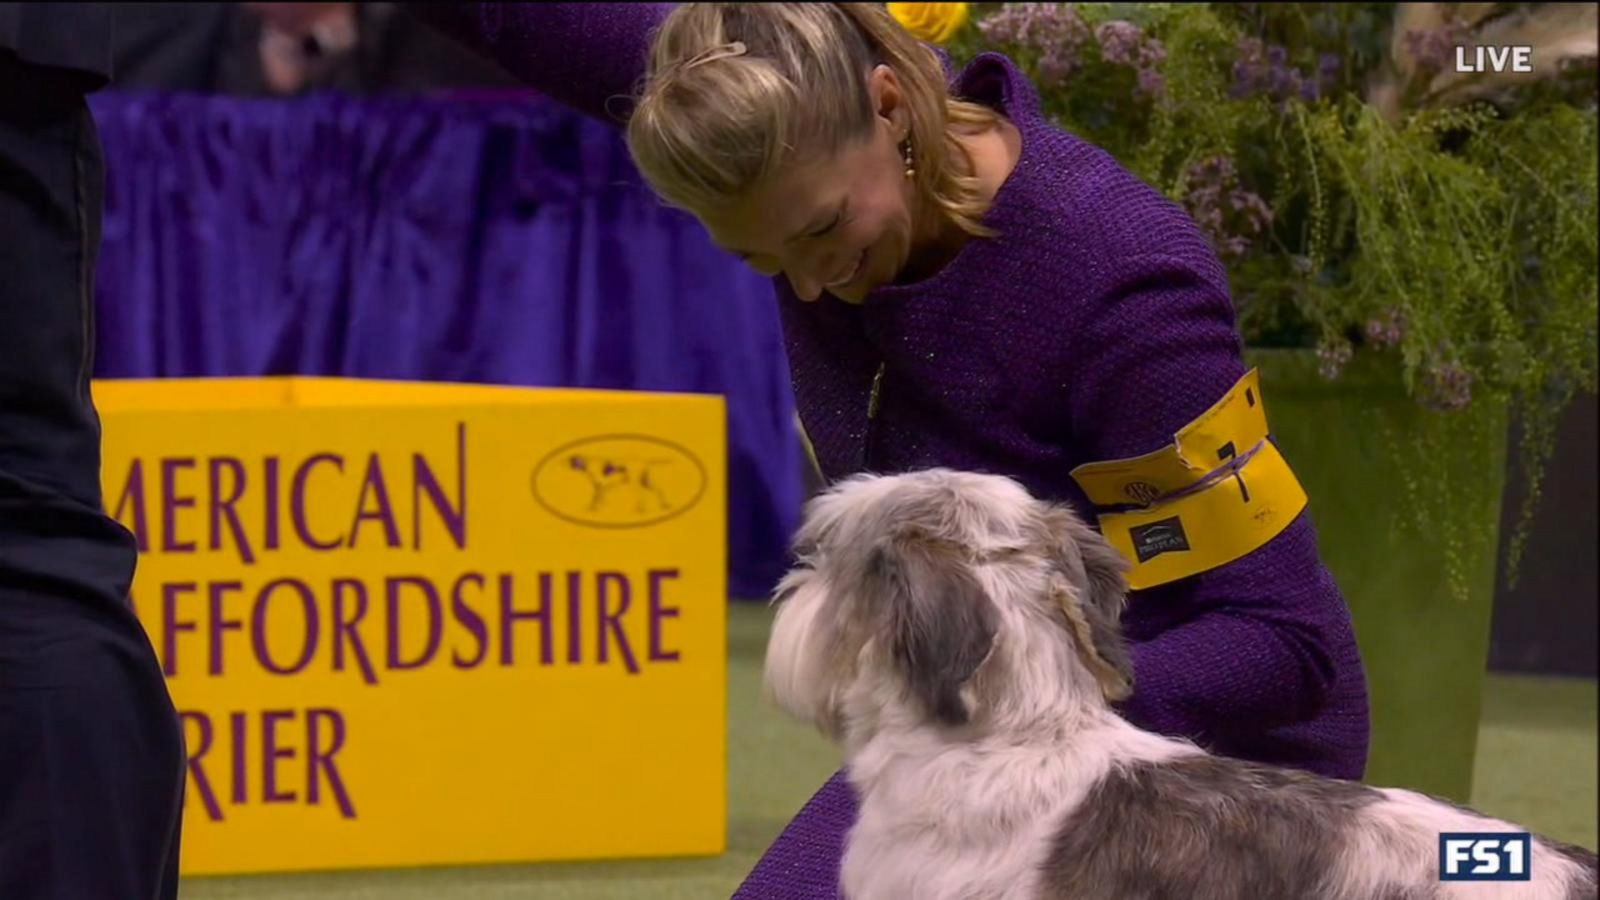 Westminster Dog Show winner makes history Good Morning America